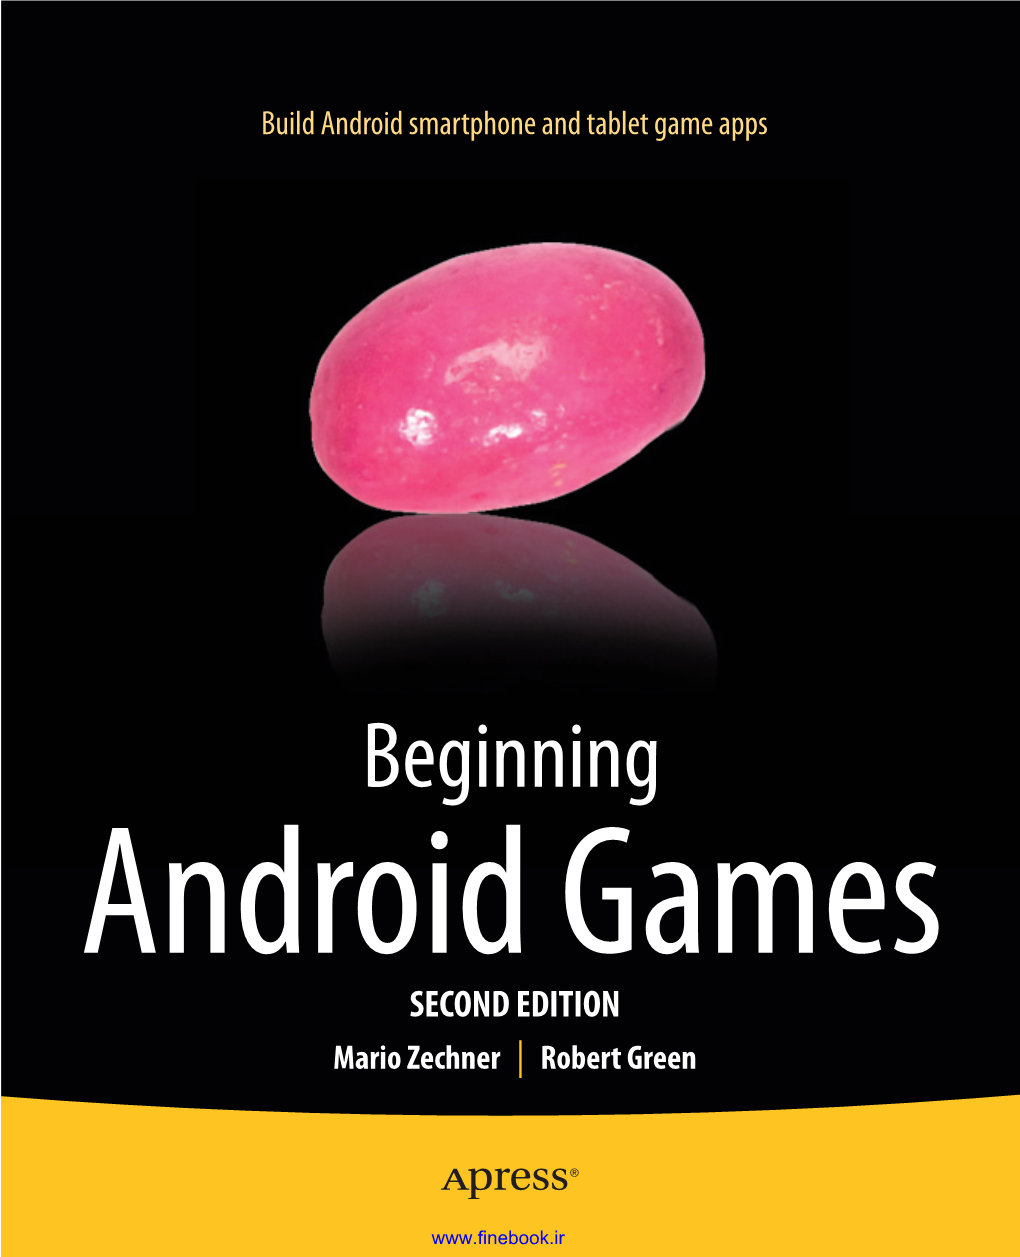 Beginning Android Games SECOND EDITION Mario Zechner | Robert Green